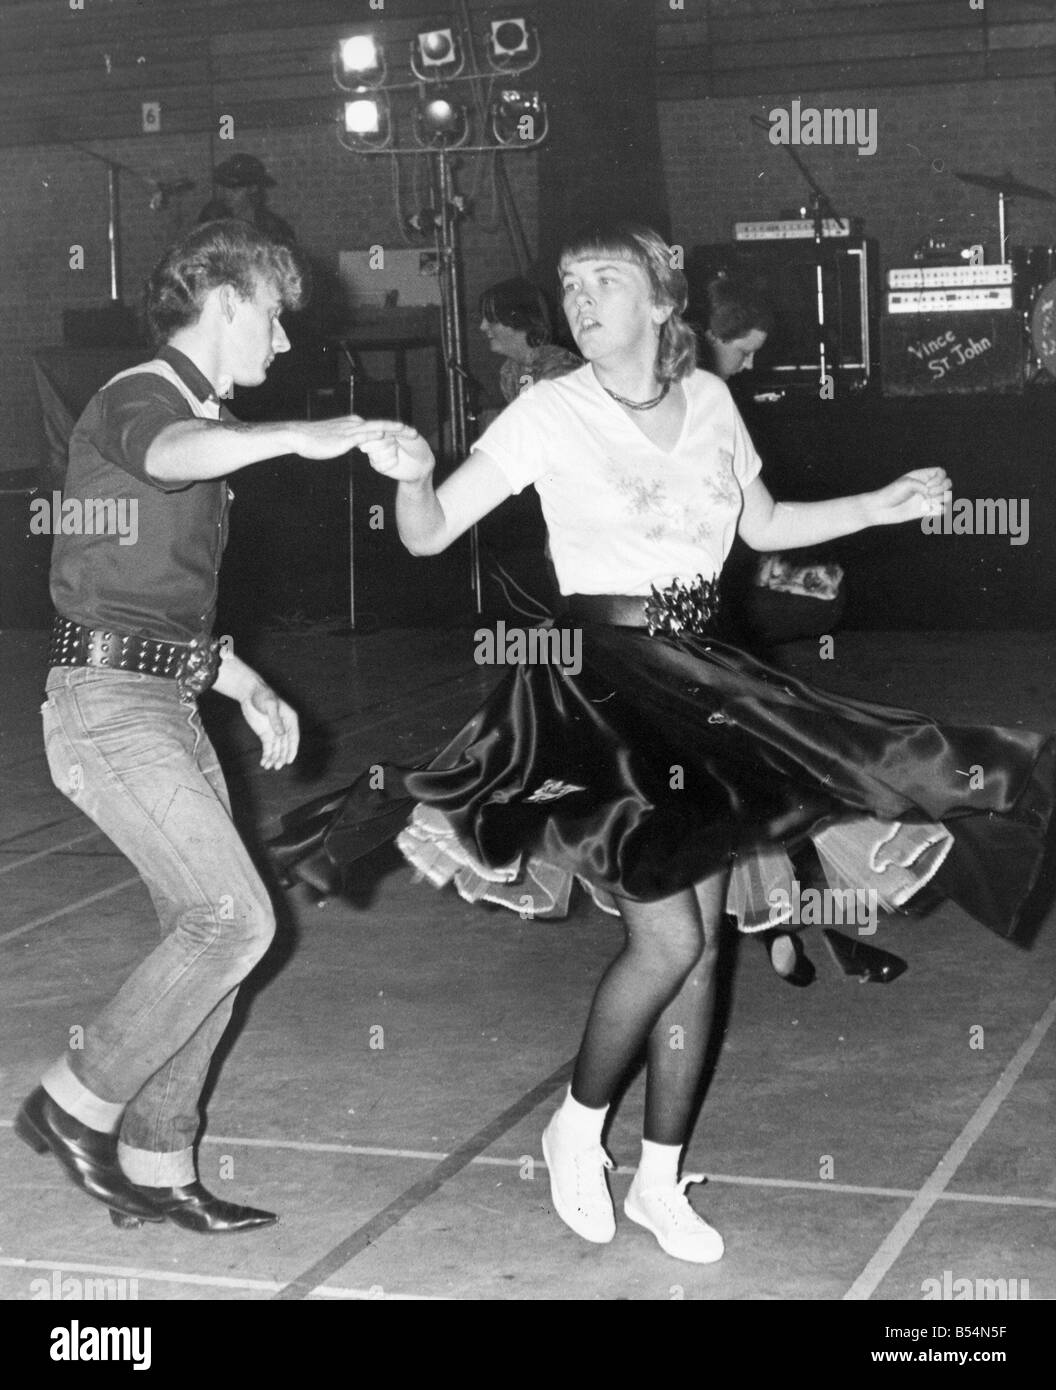 Rock ' n roll dancing -Fotos und -Bildmaterial in hoher Auflösung – Alamy